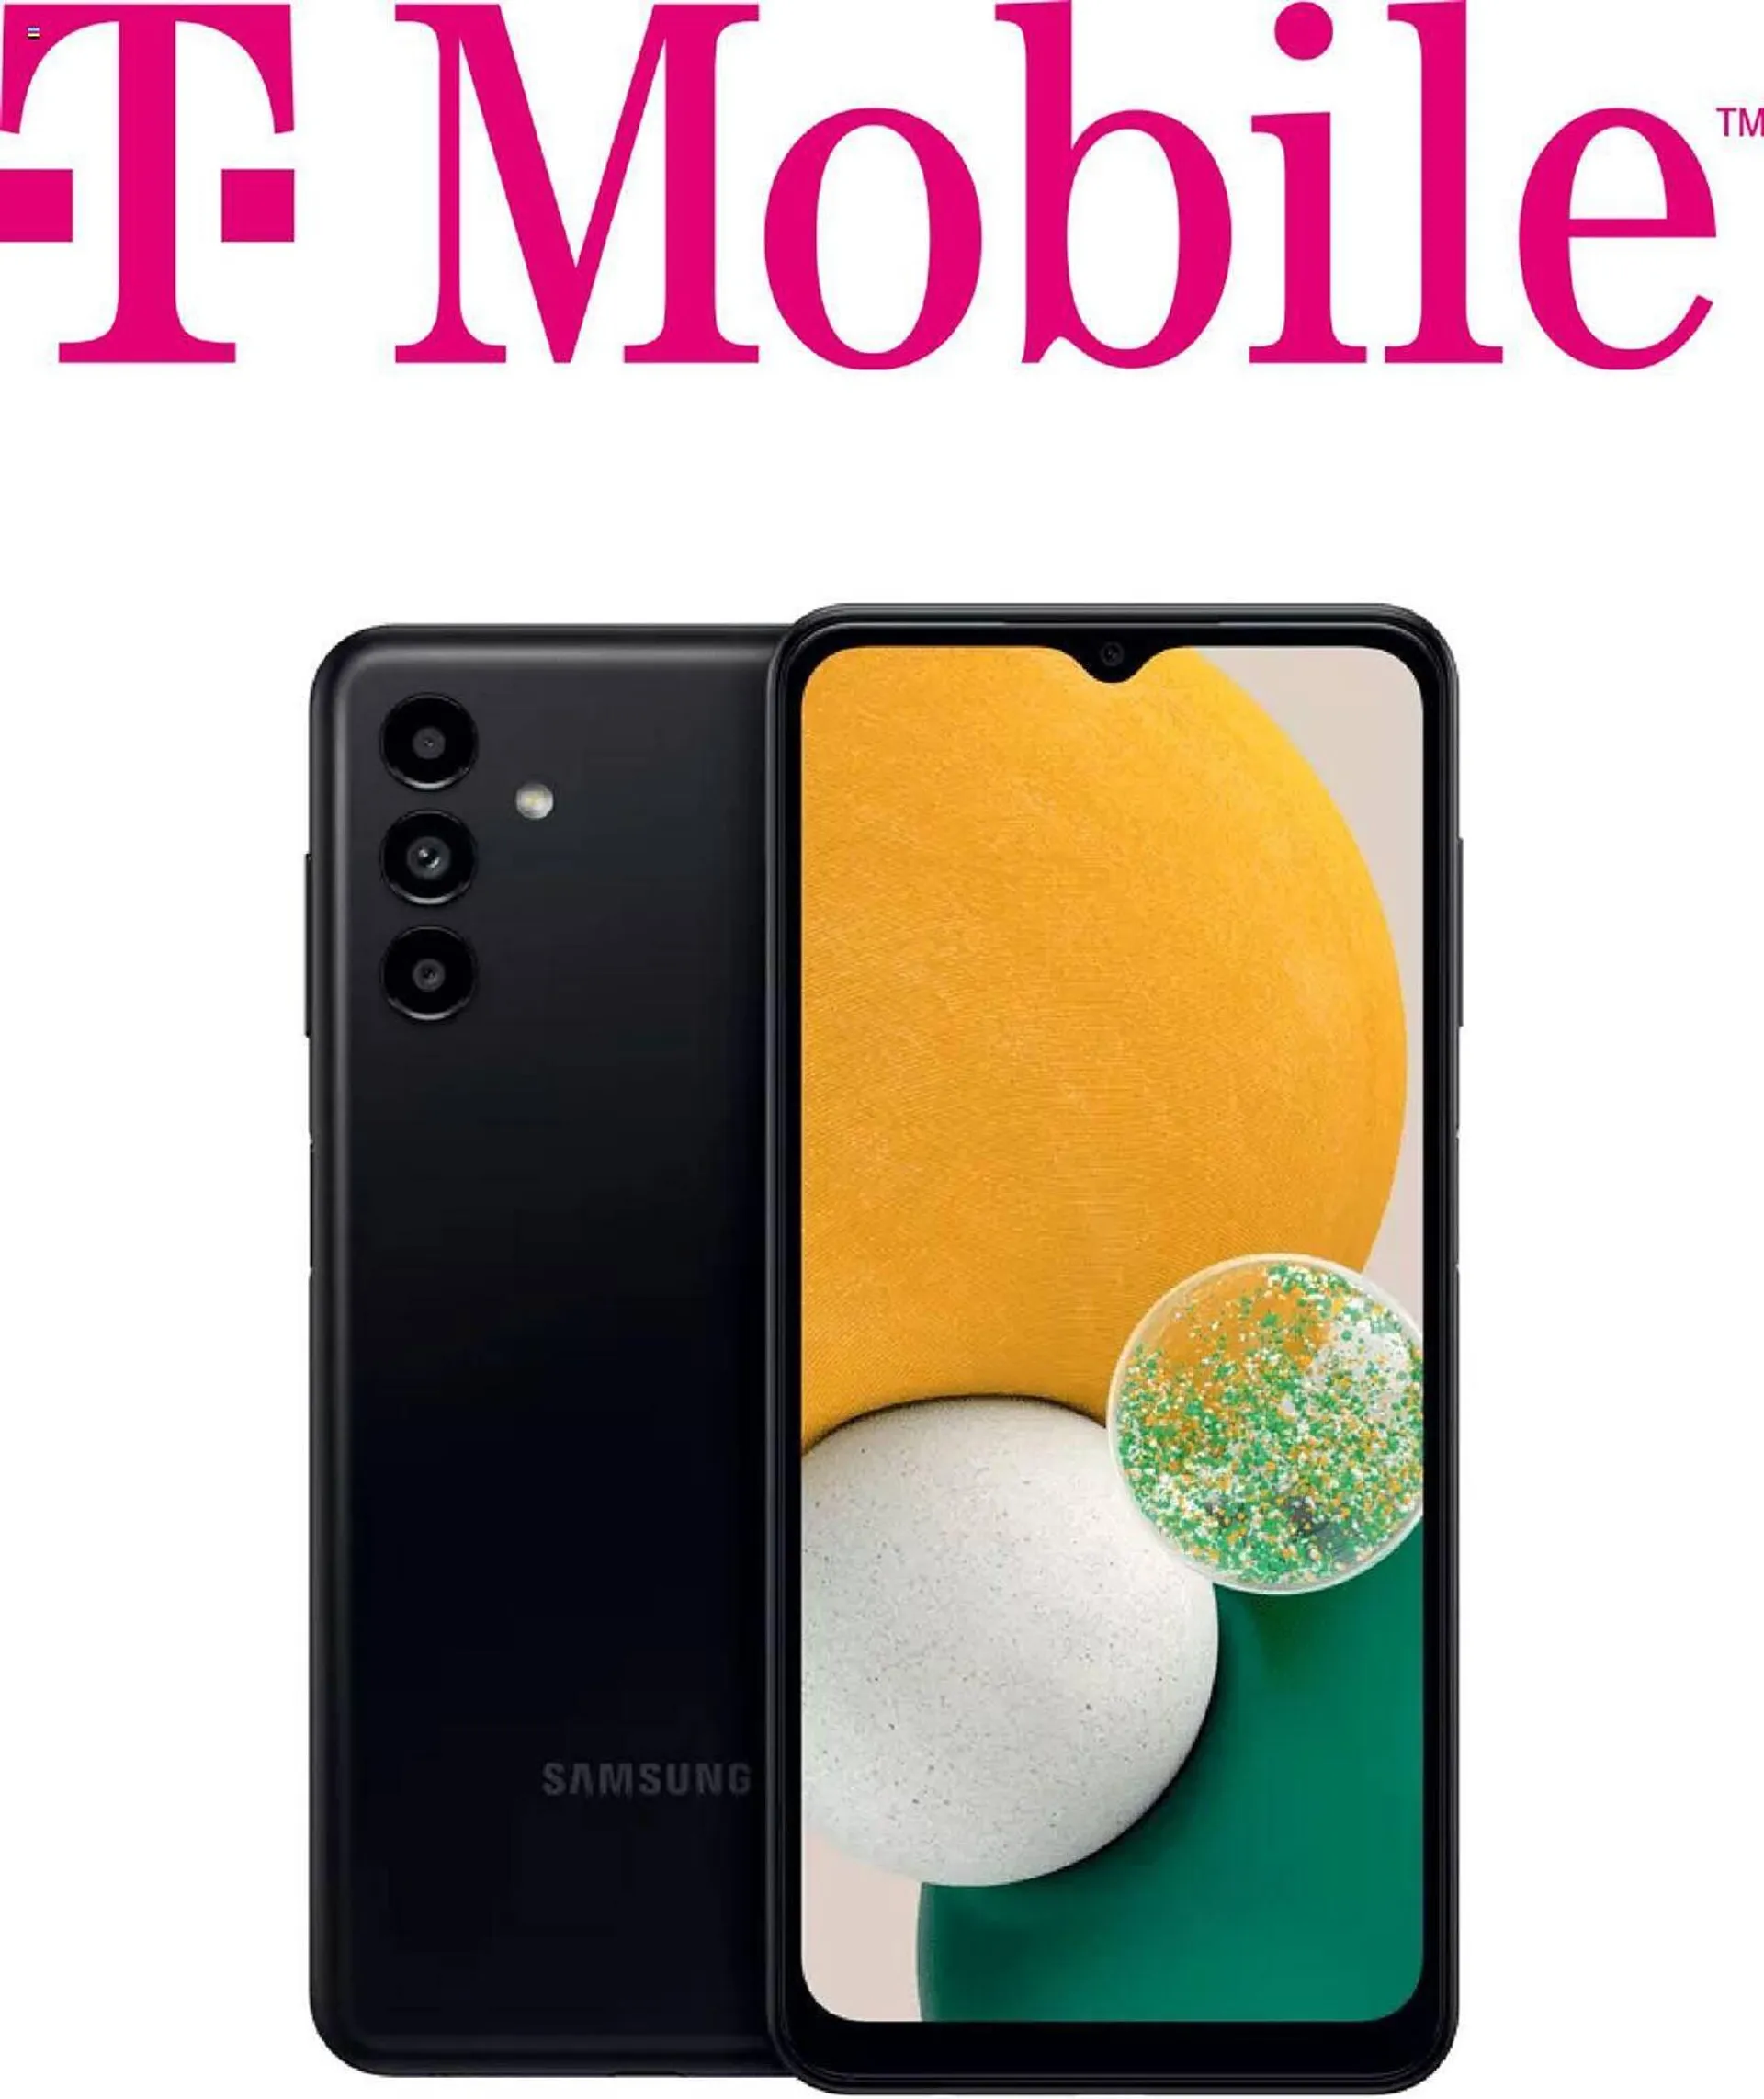 T-Mobile ad - 1